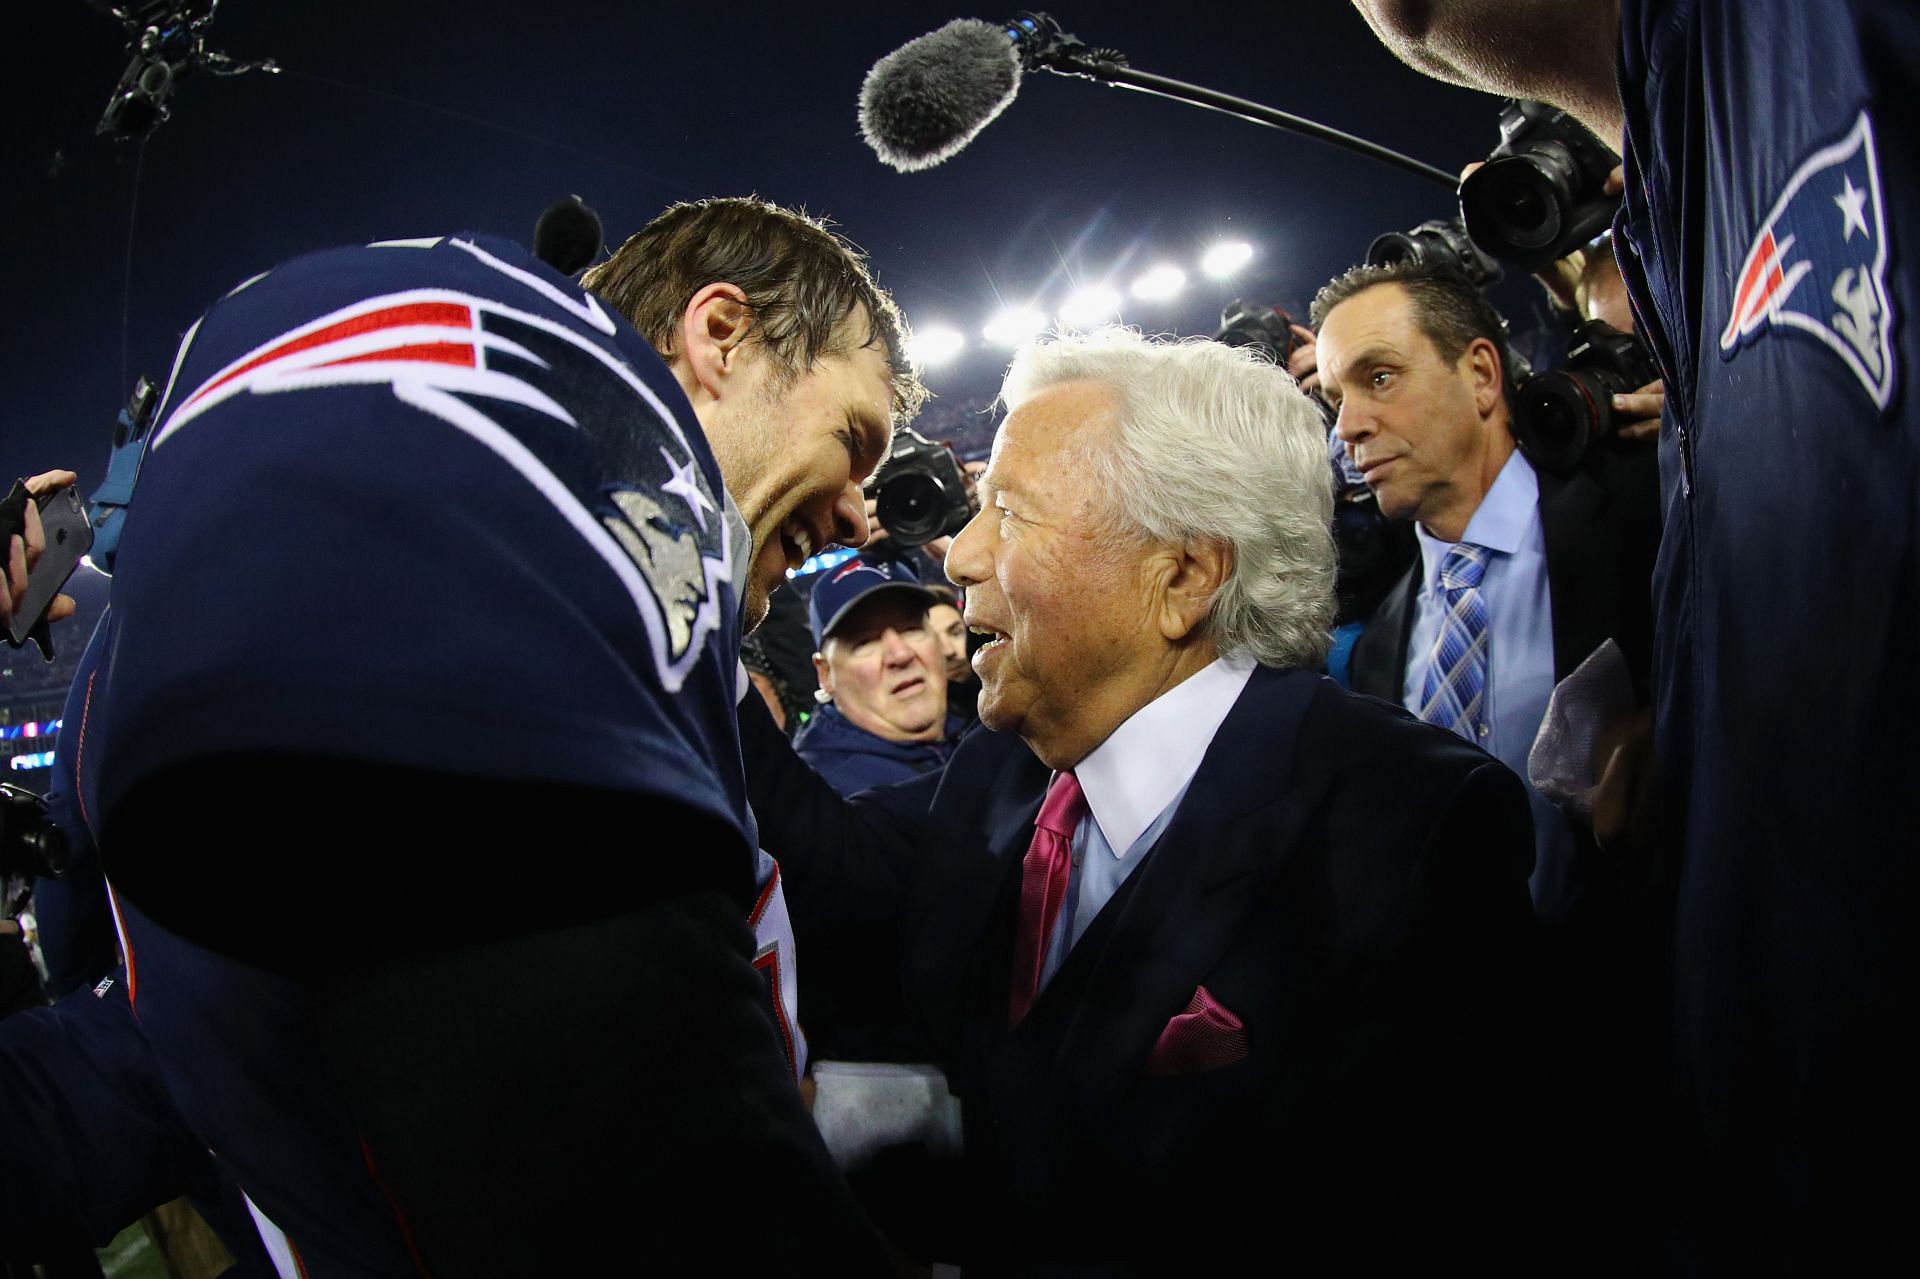 AFC Championship - Tom Brady and New England Patriots team owner Robert Kraft